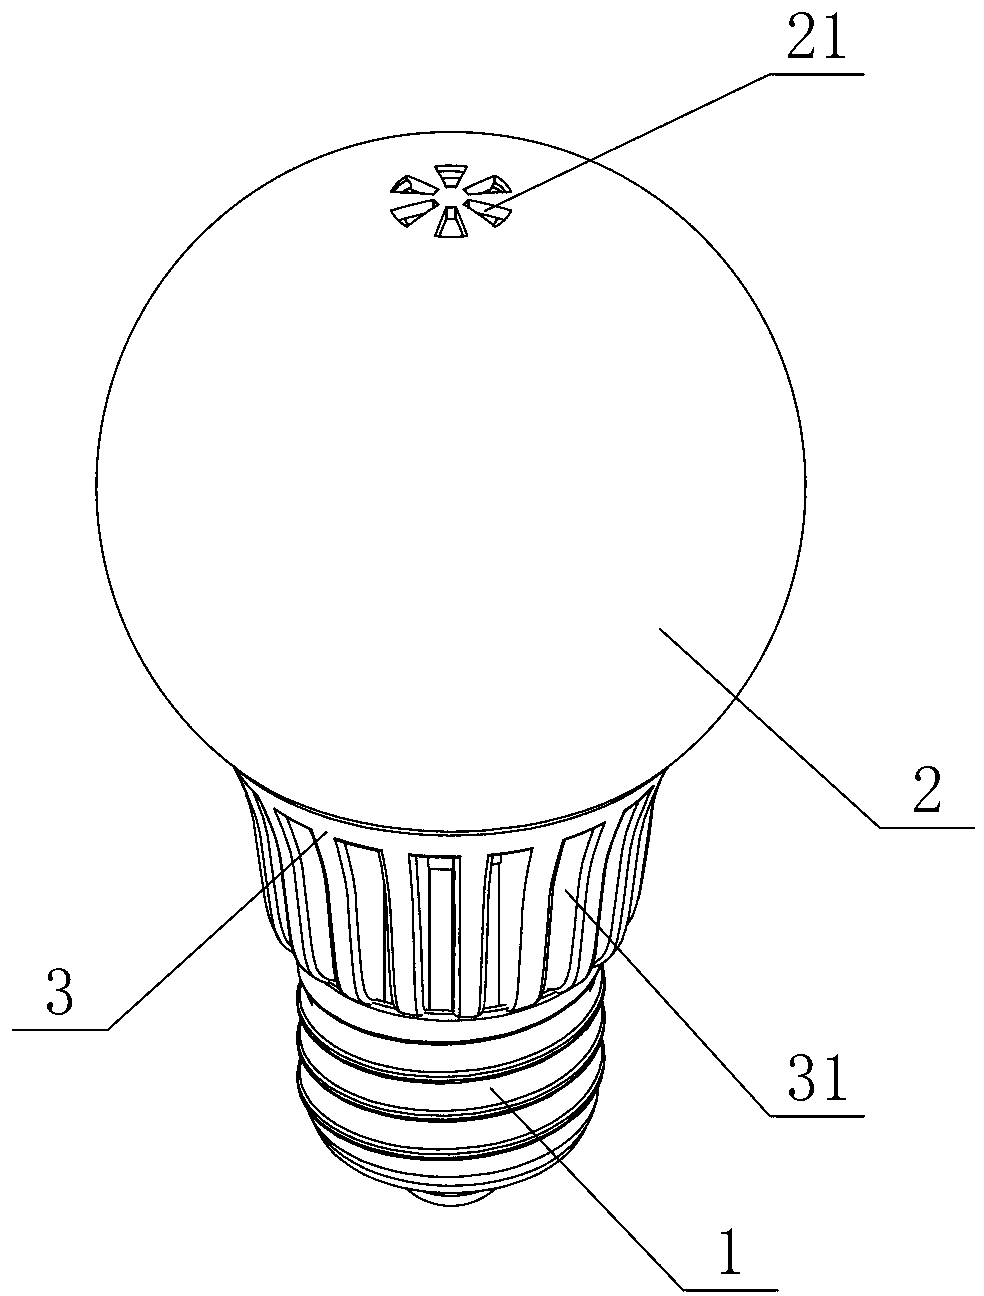 Convection radiating type LED (light-emitting diode) bulb